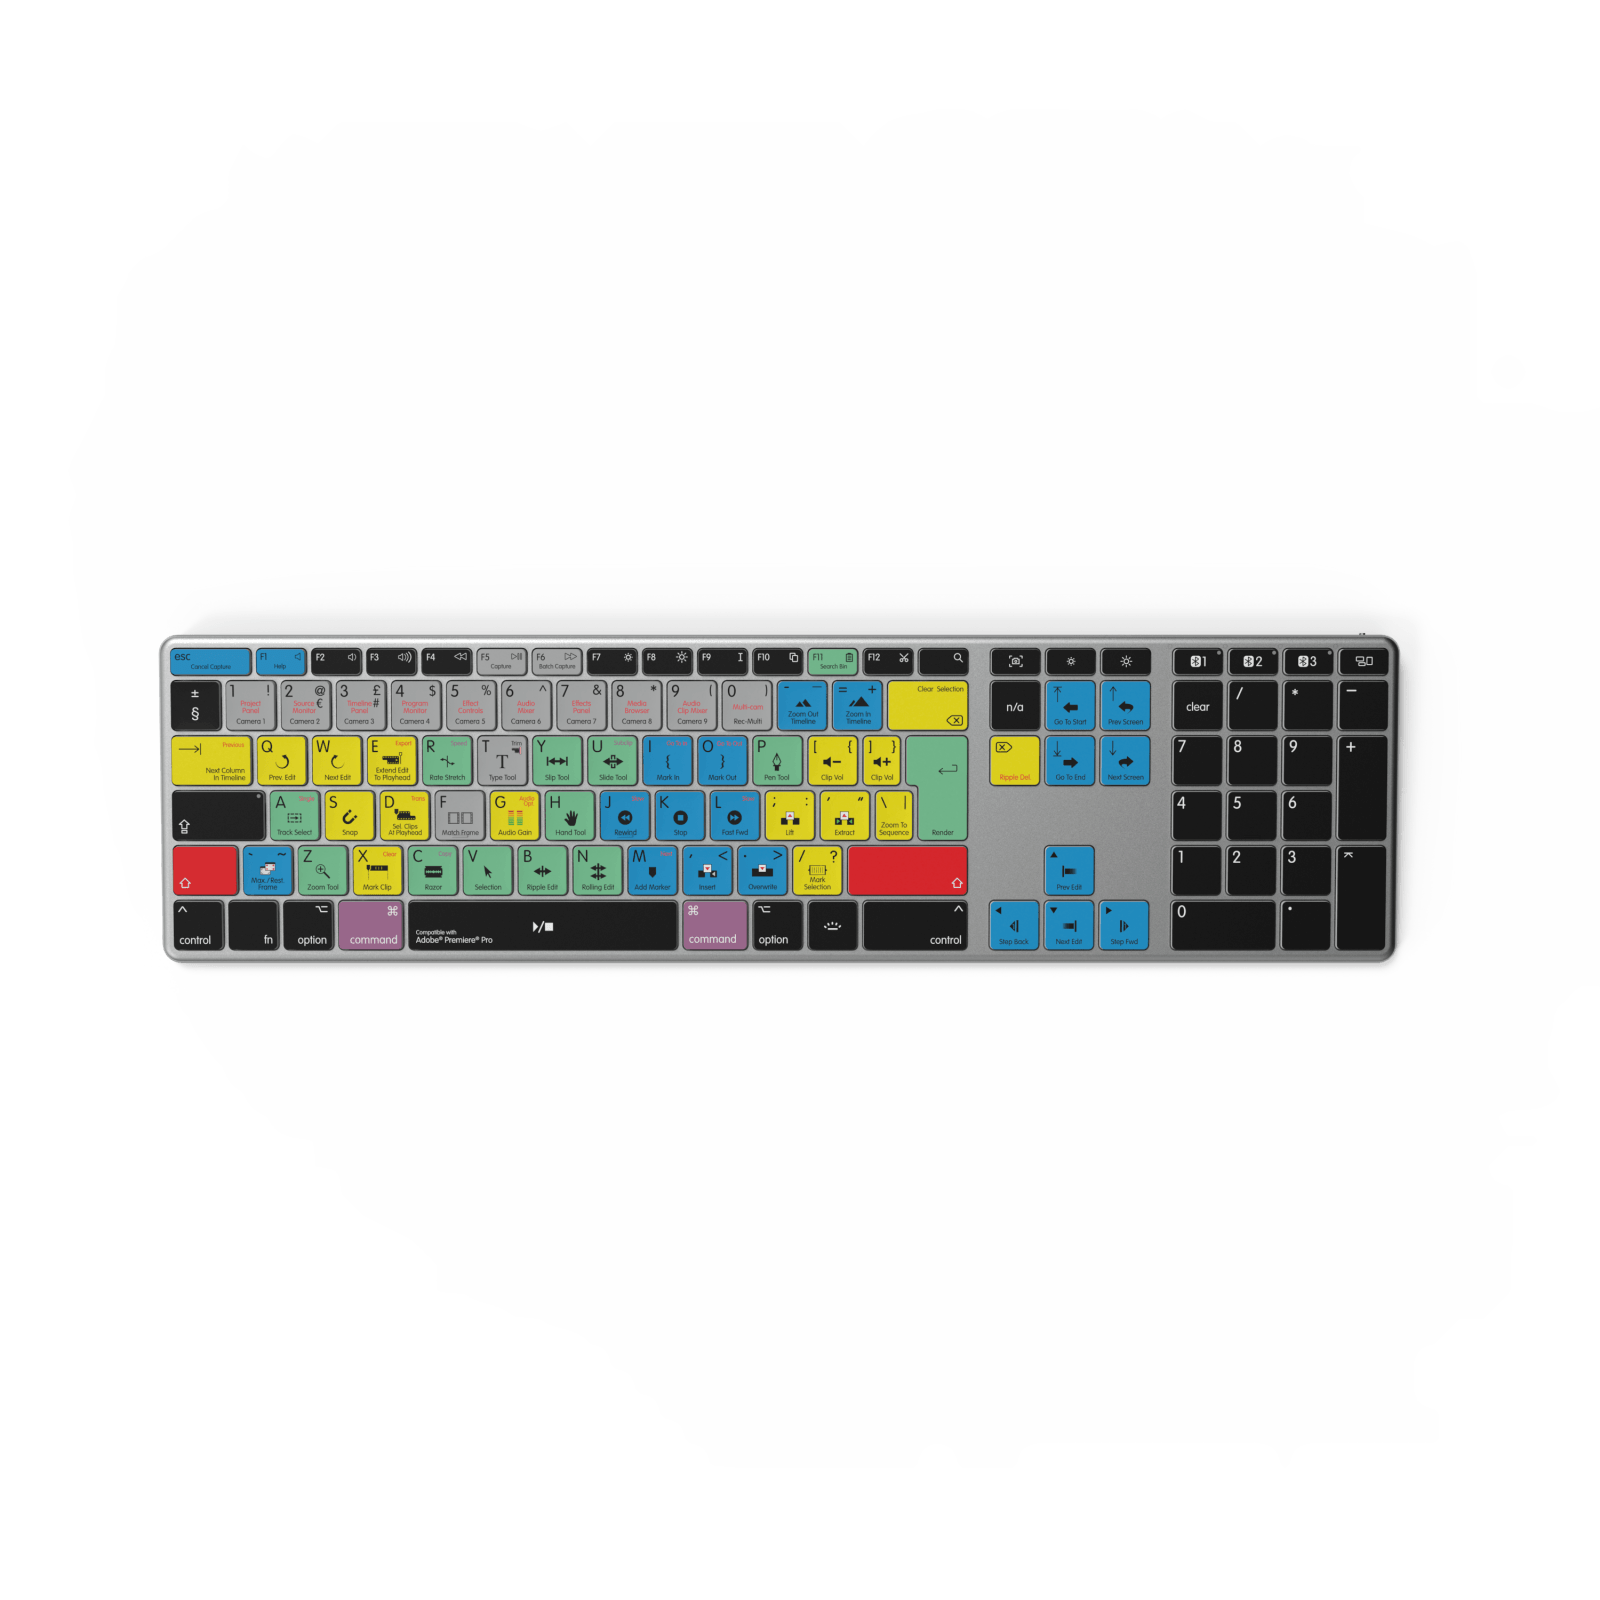 NEW Adobe Premiere Keyboard | Backlit & Wireless | Mac and PC - Editors Keys